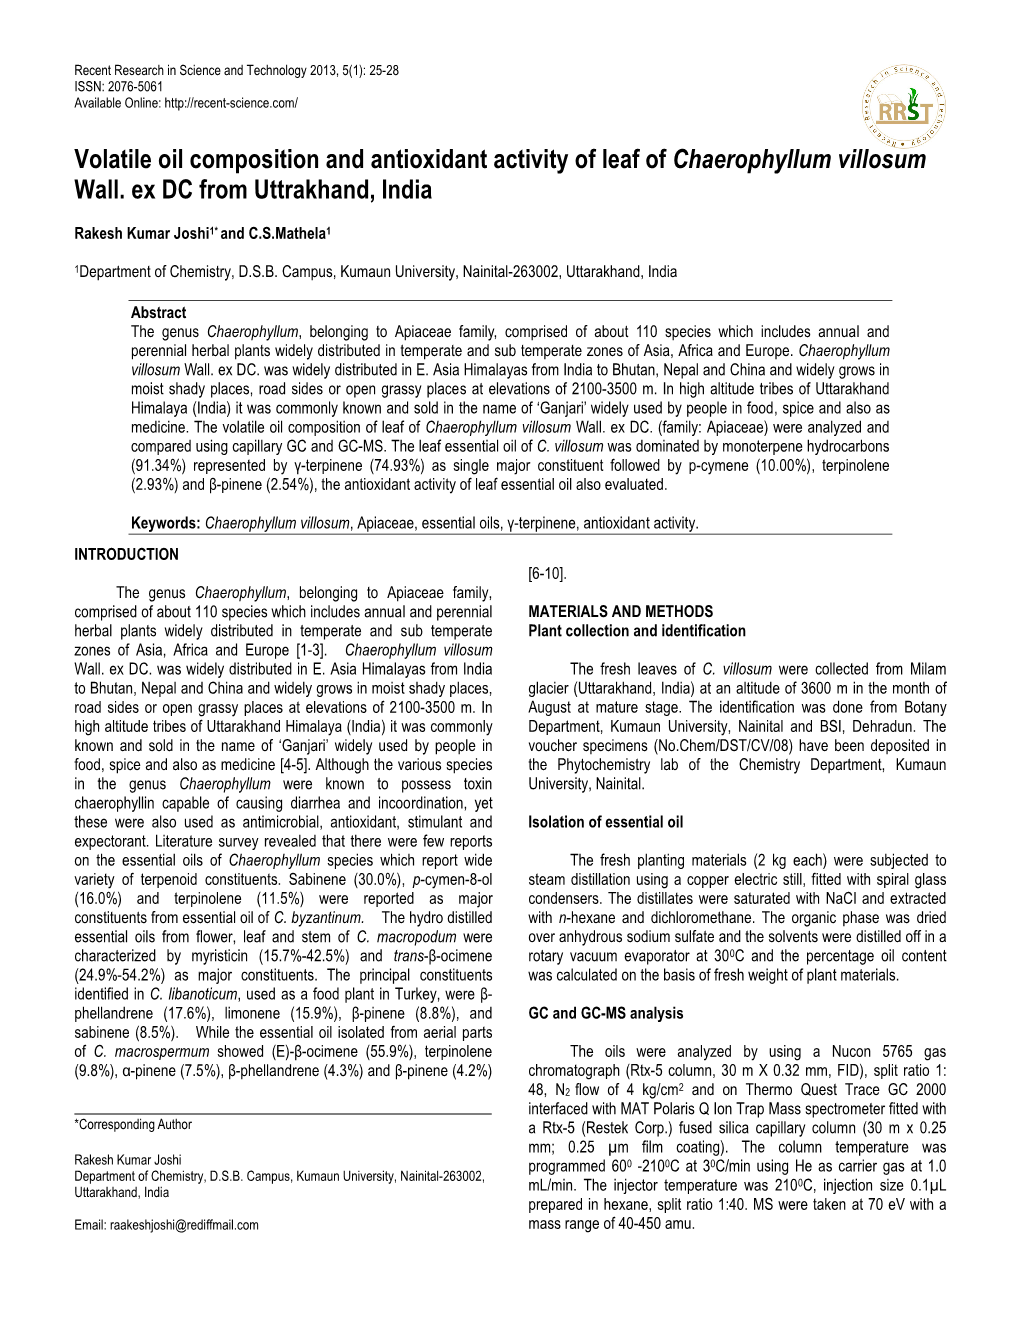 Volatile Oil Composition and Antioxidant Activity of Leaf of Chaerophyllum Villosum Wall